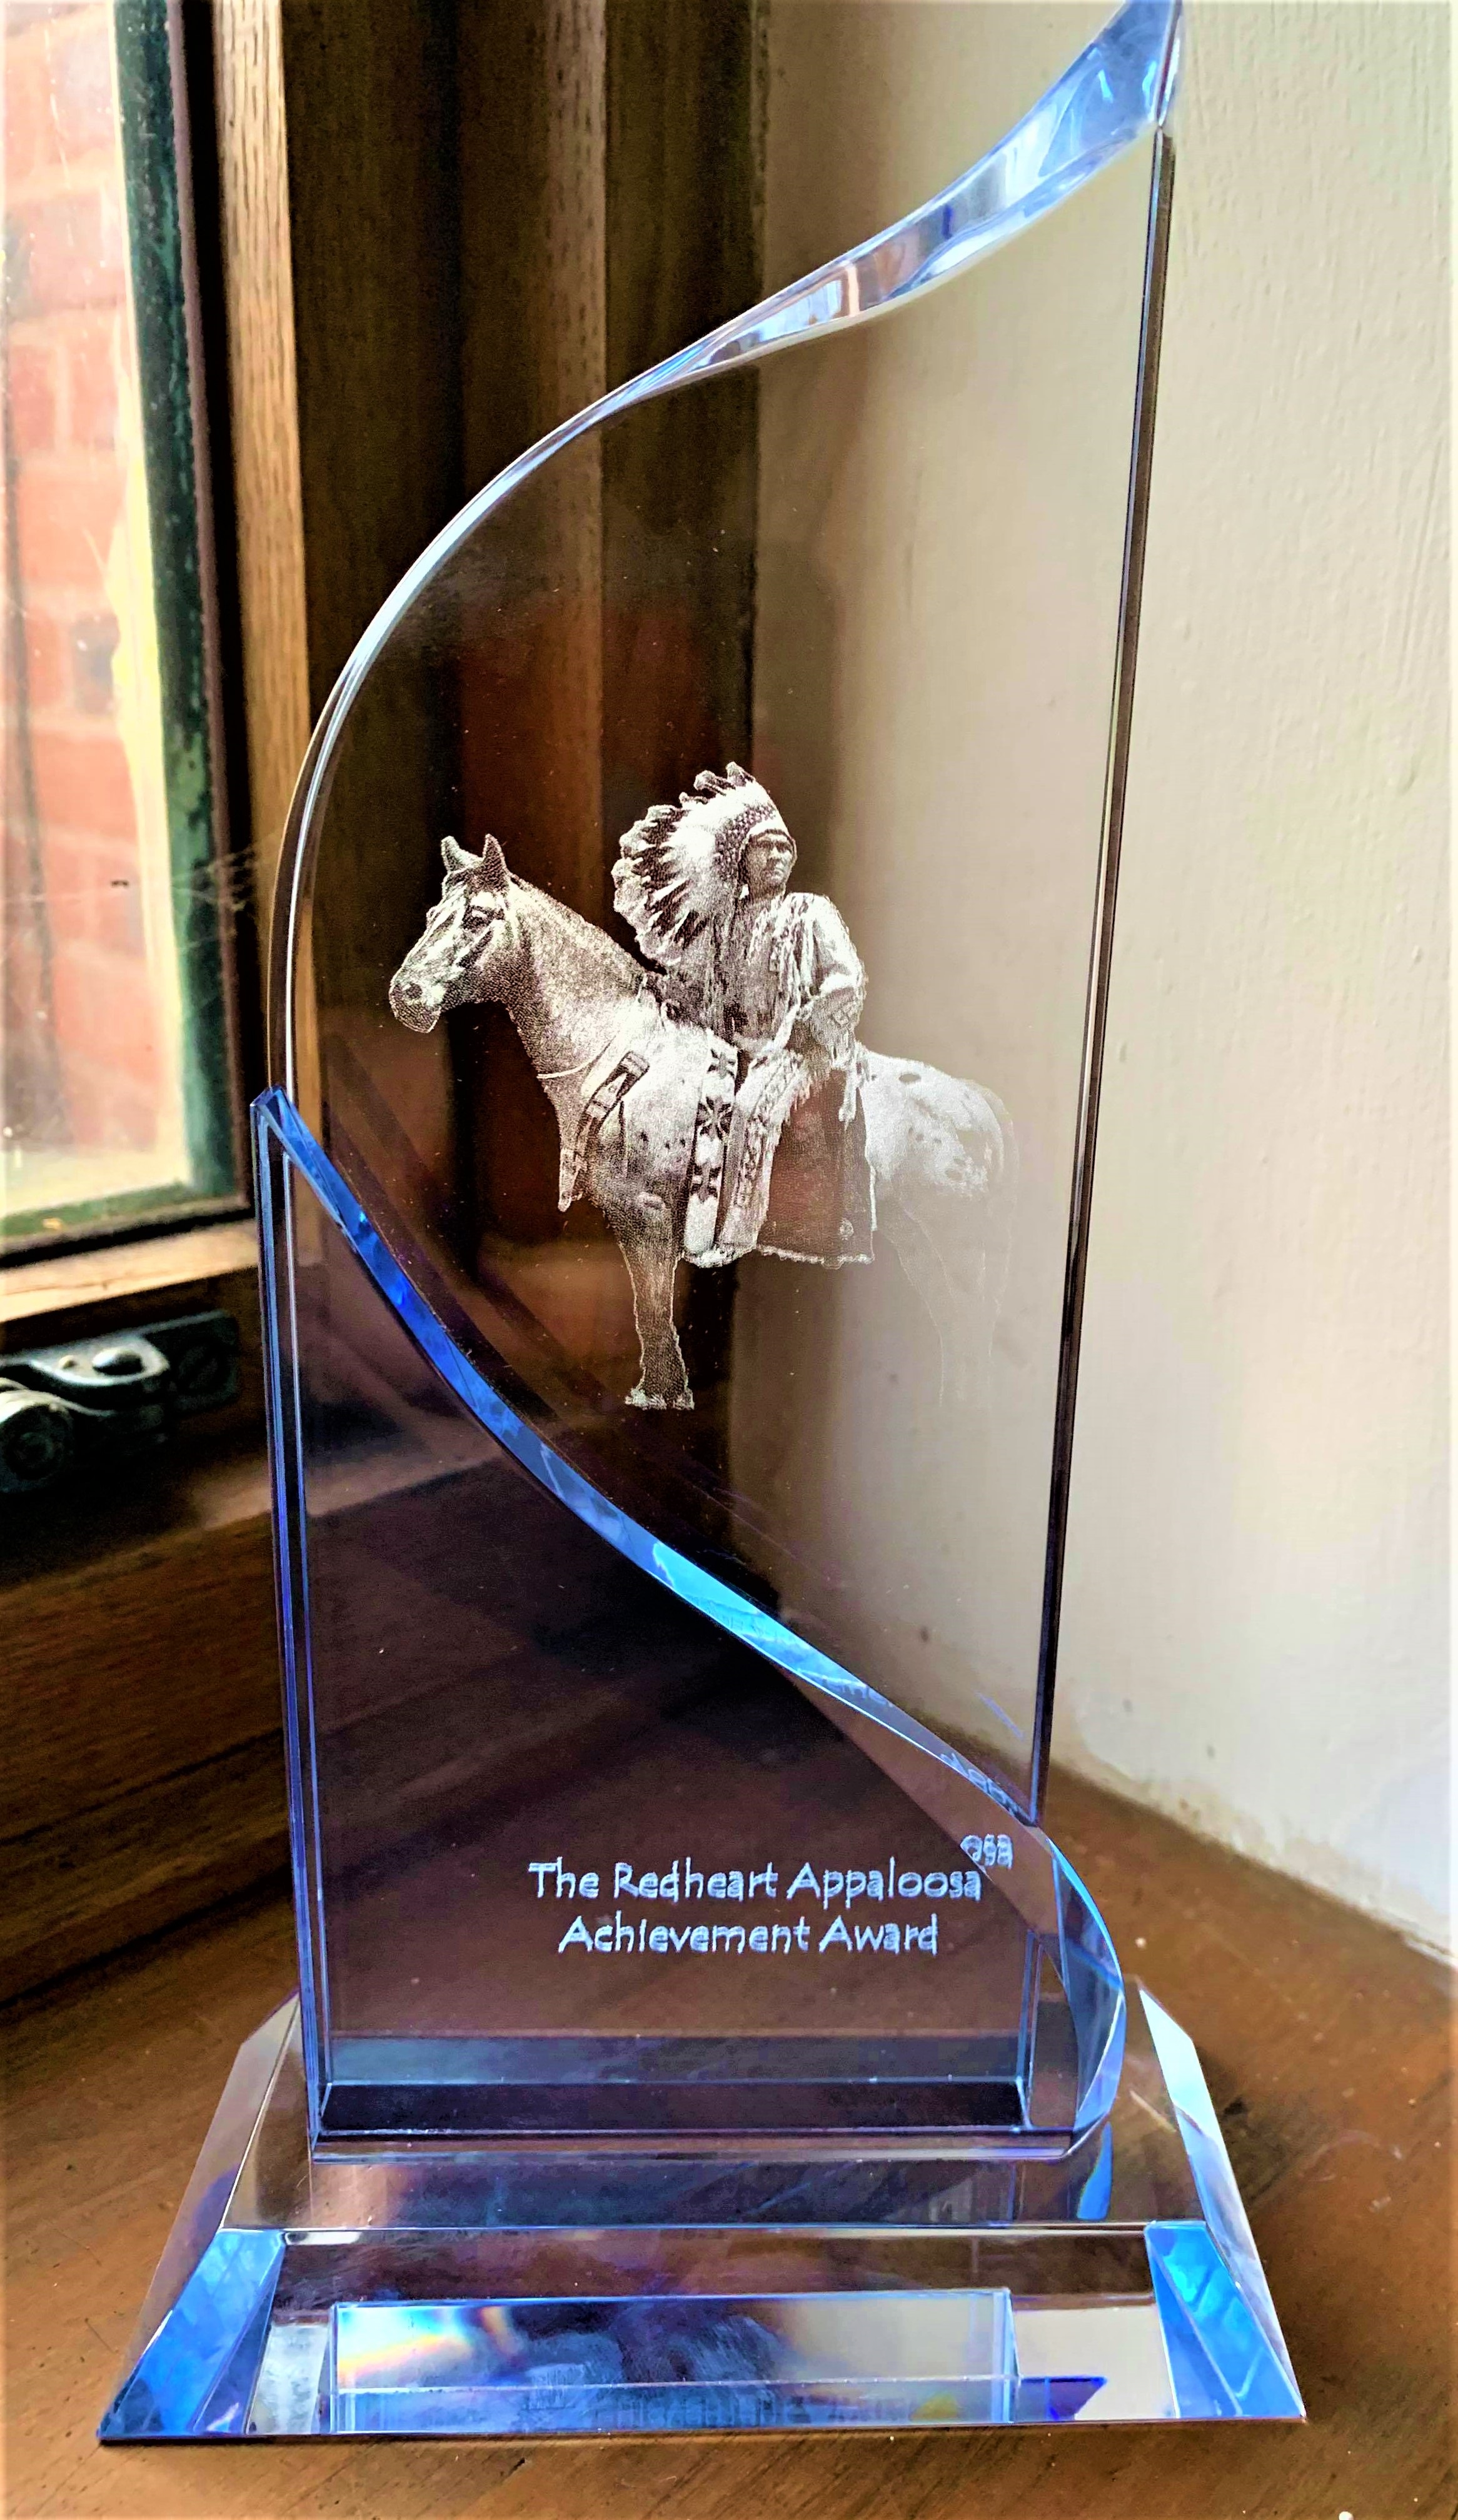 The ApHC UK Achievement Award